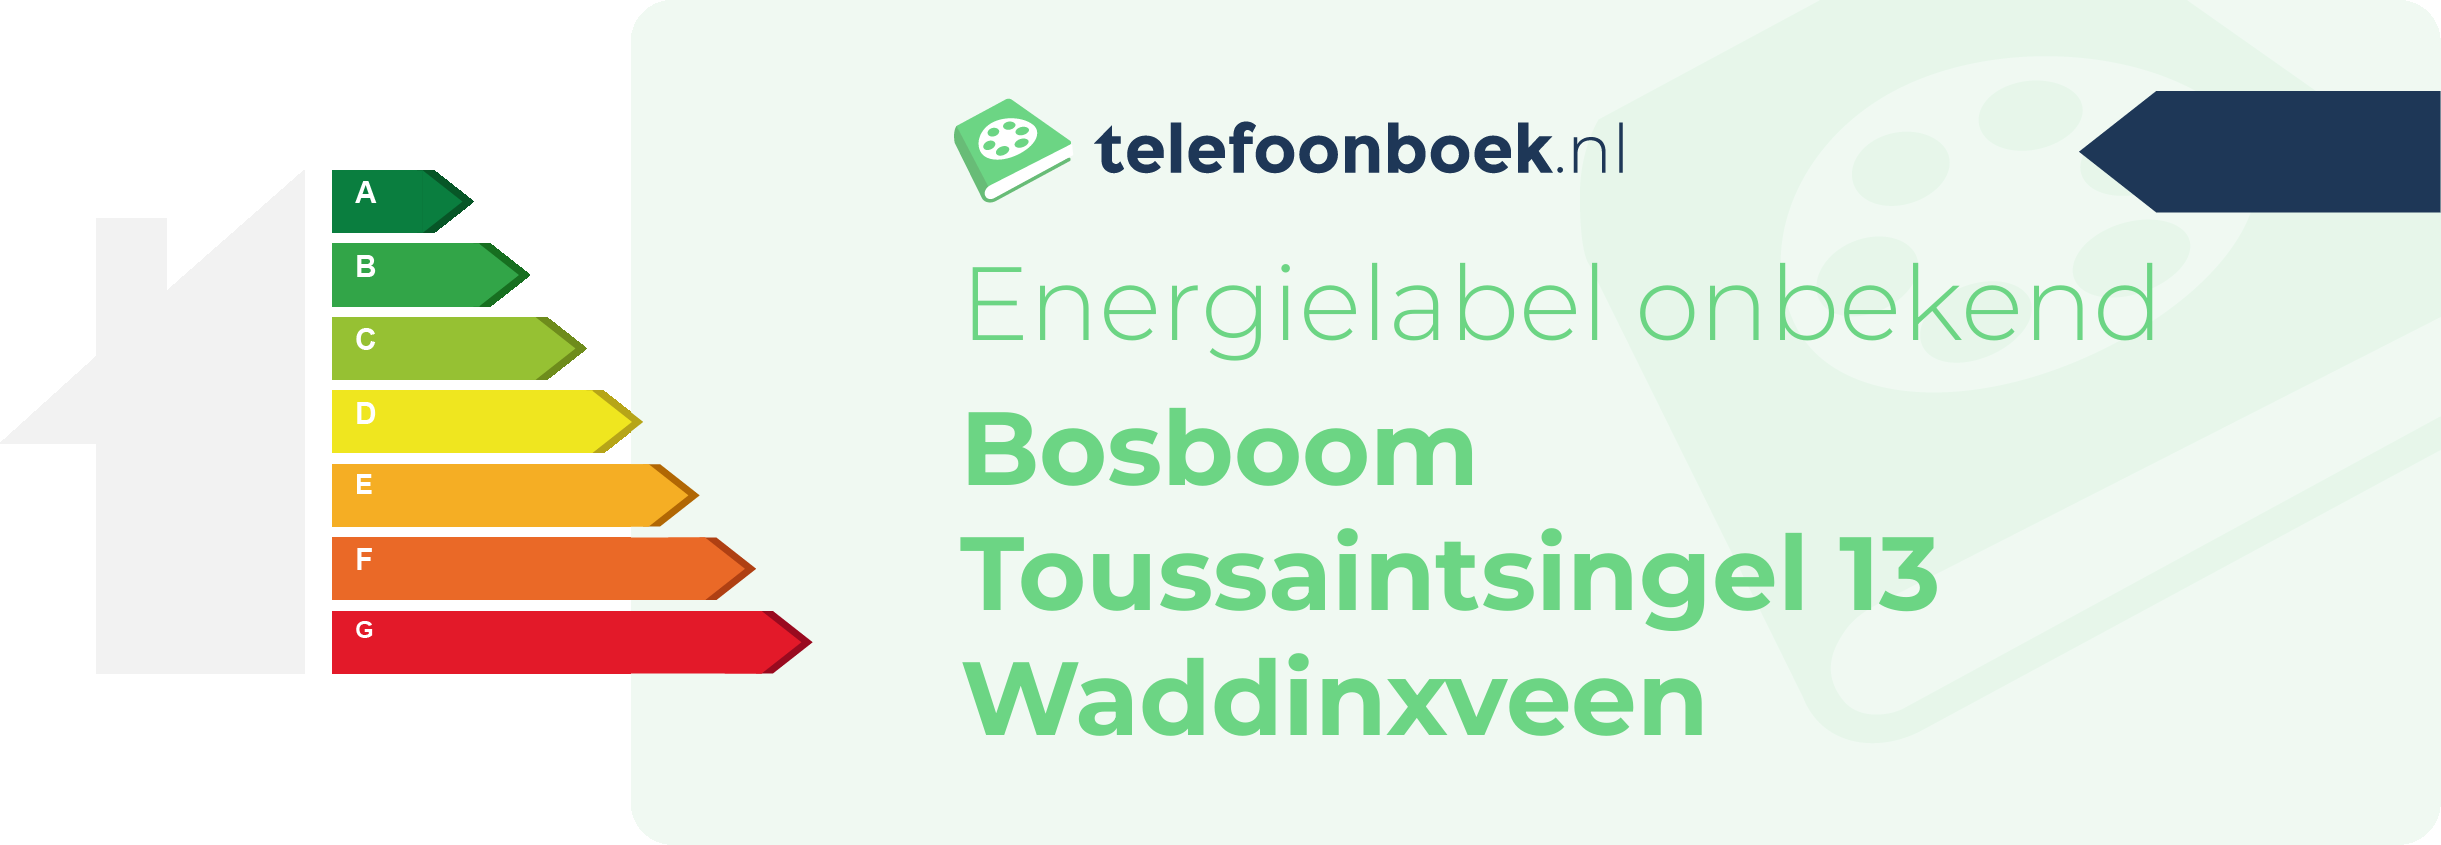 Energielabel Bosboom Toussaintsingel 13 Waddinxveen